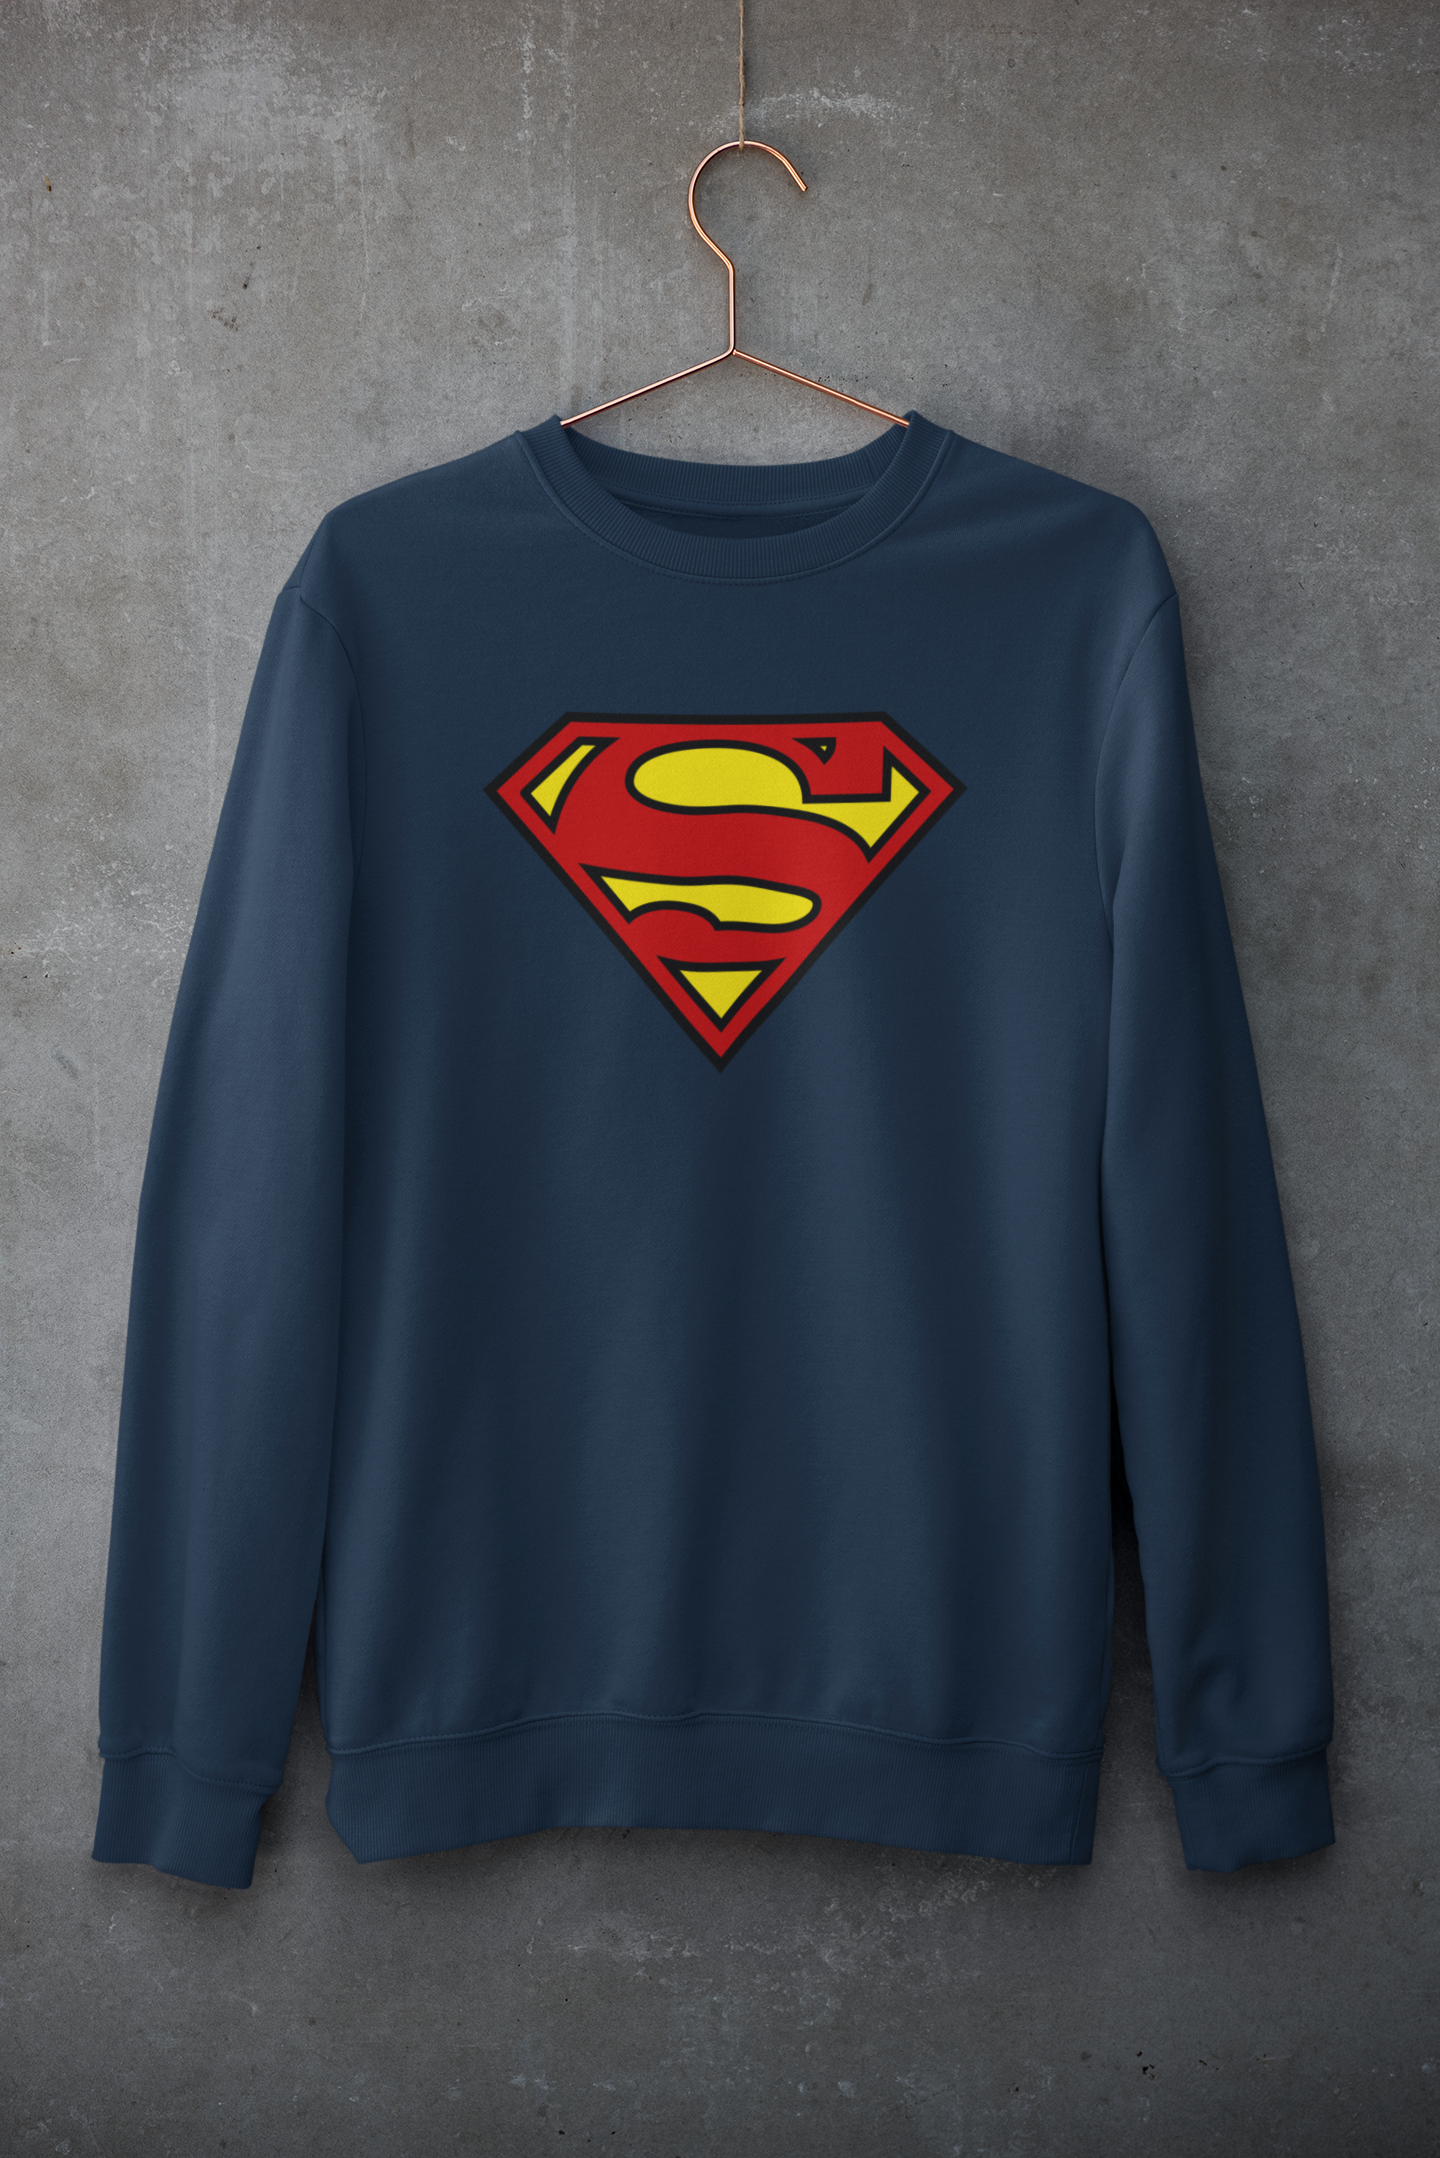 Superman Emblem - Winter Sweatshirts NAVY BLUE